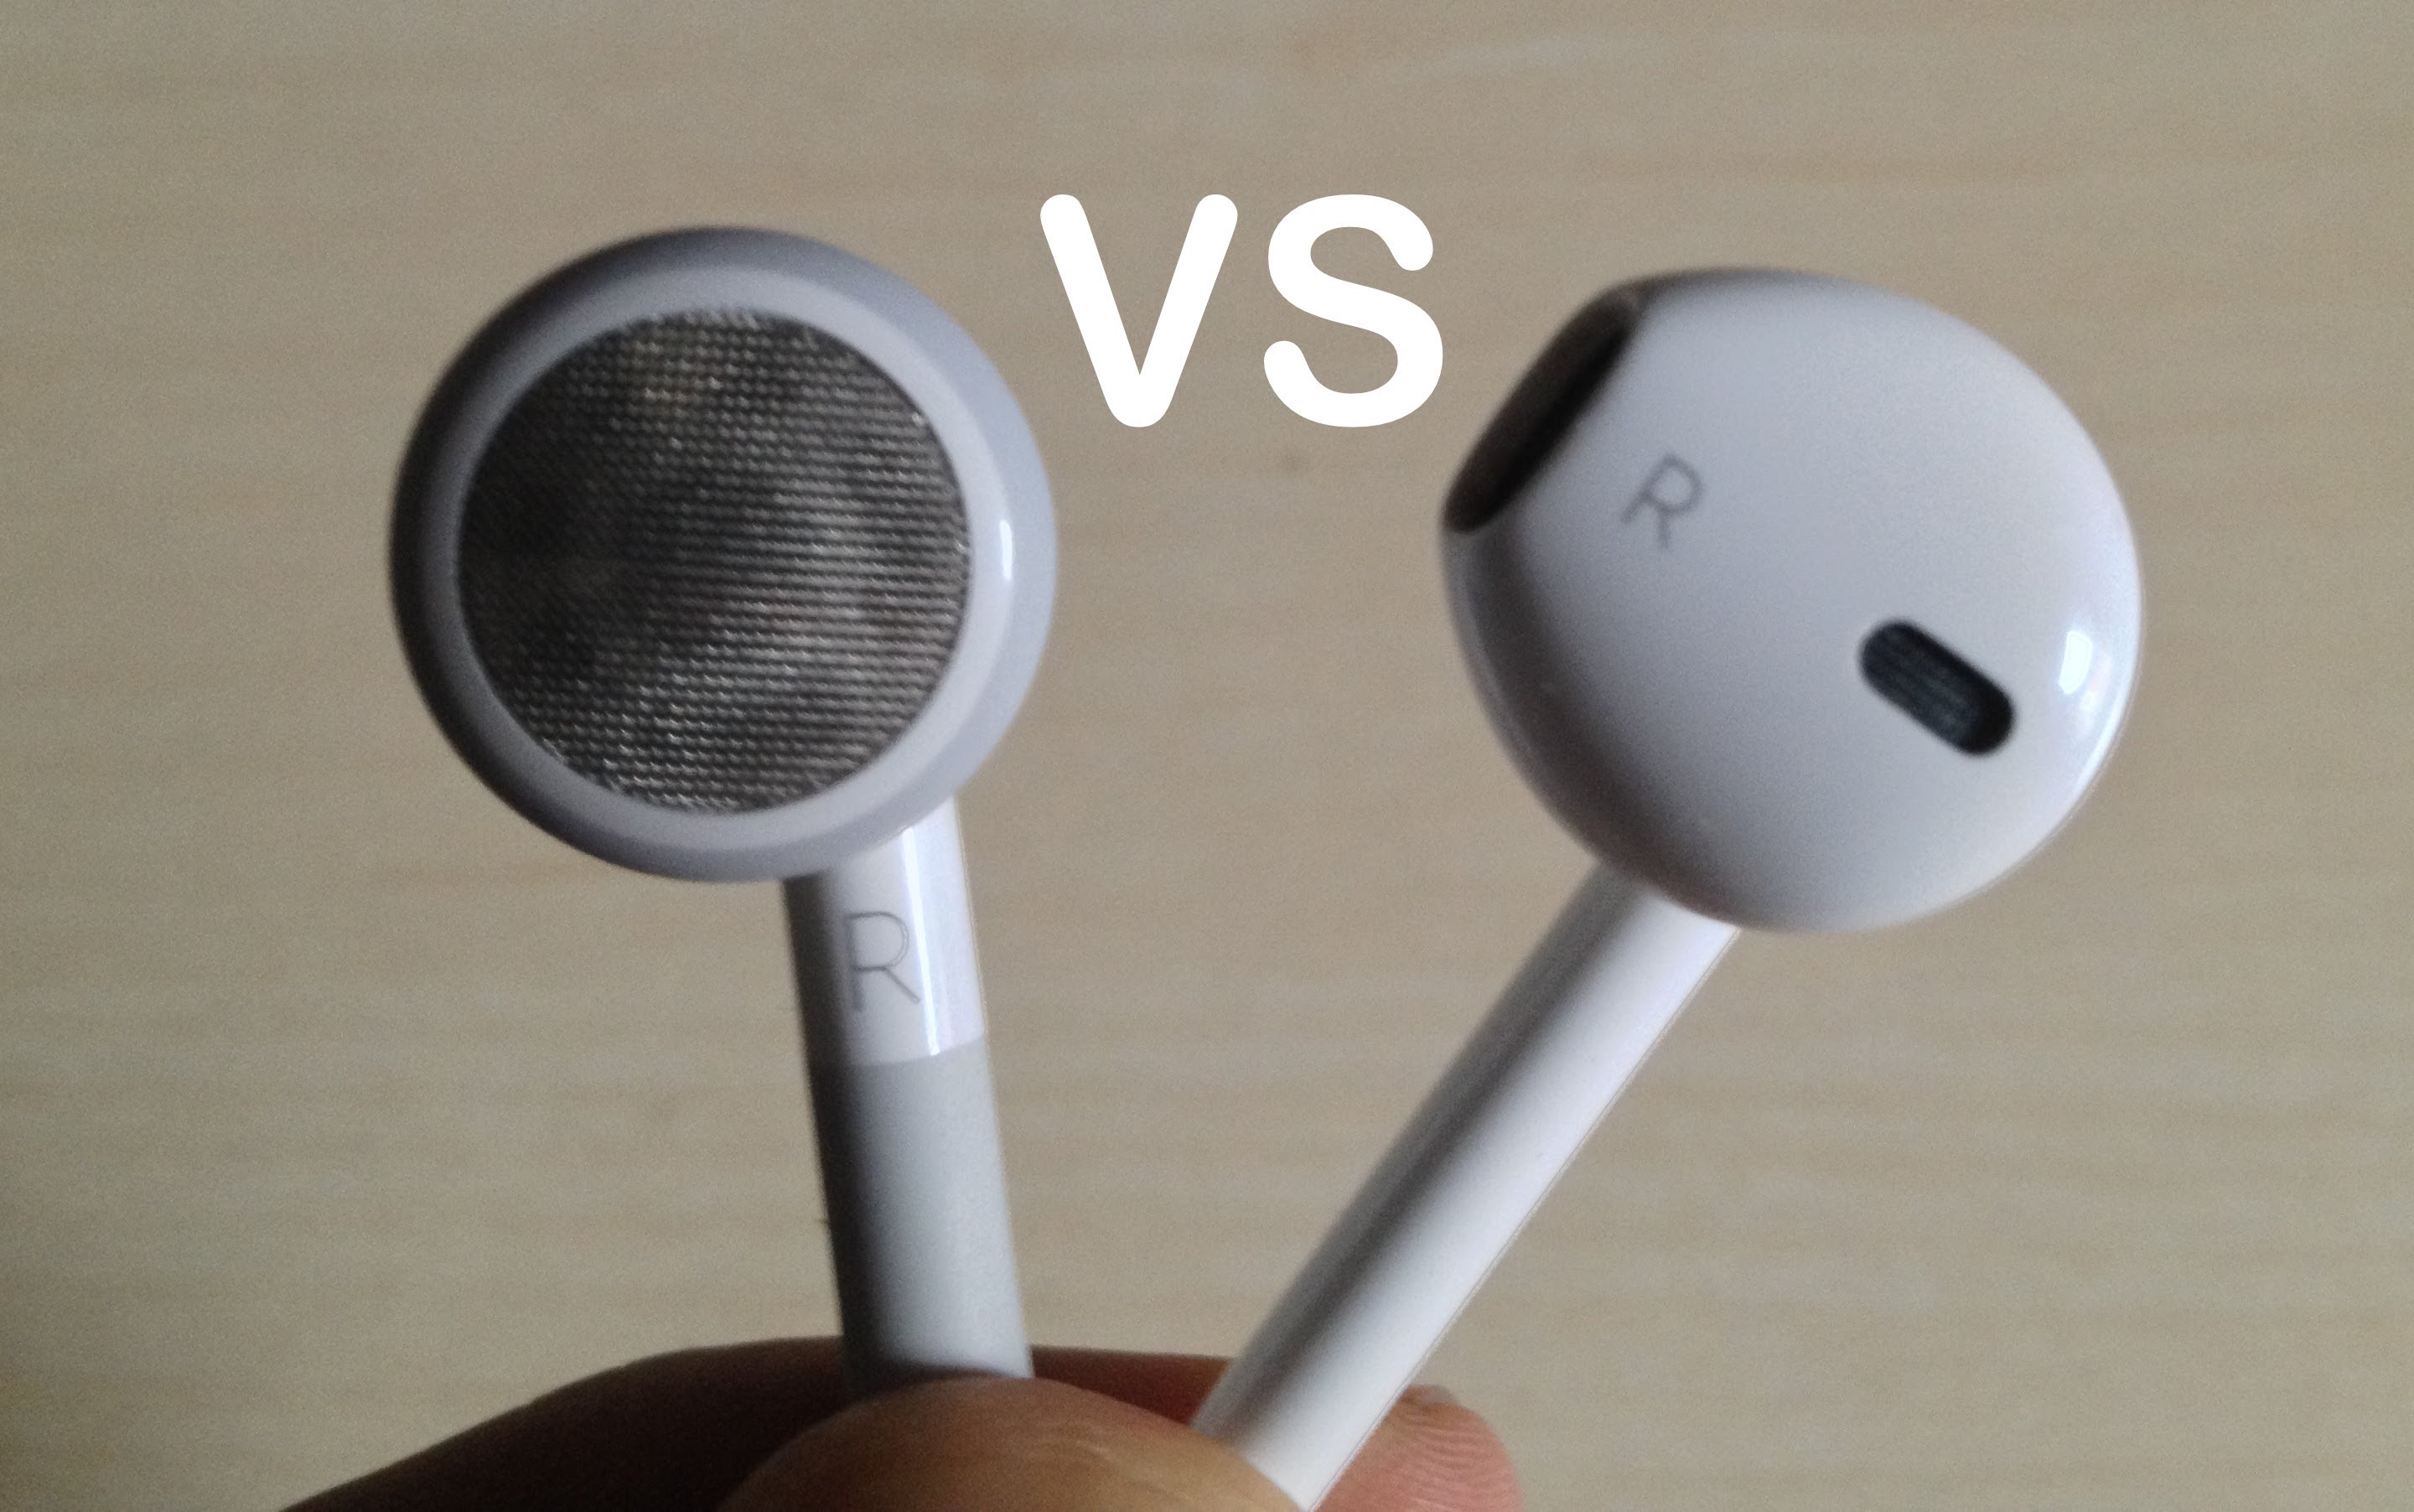 Comparison Between Apple EarPods And Old Apple Headphones - YouTube